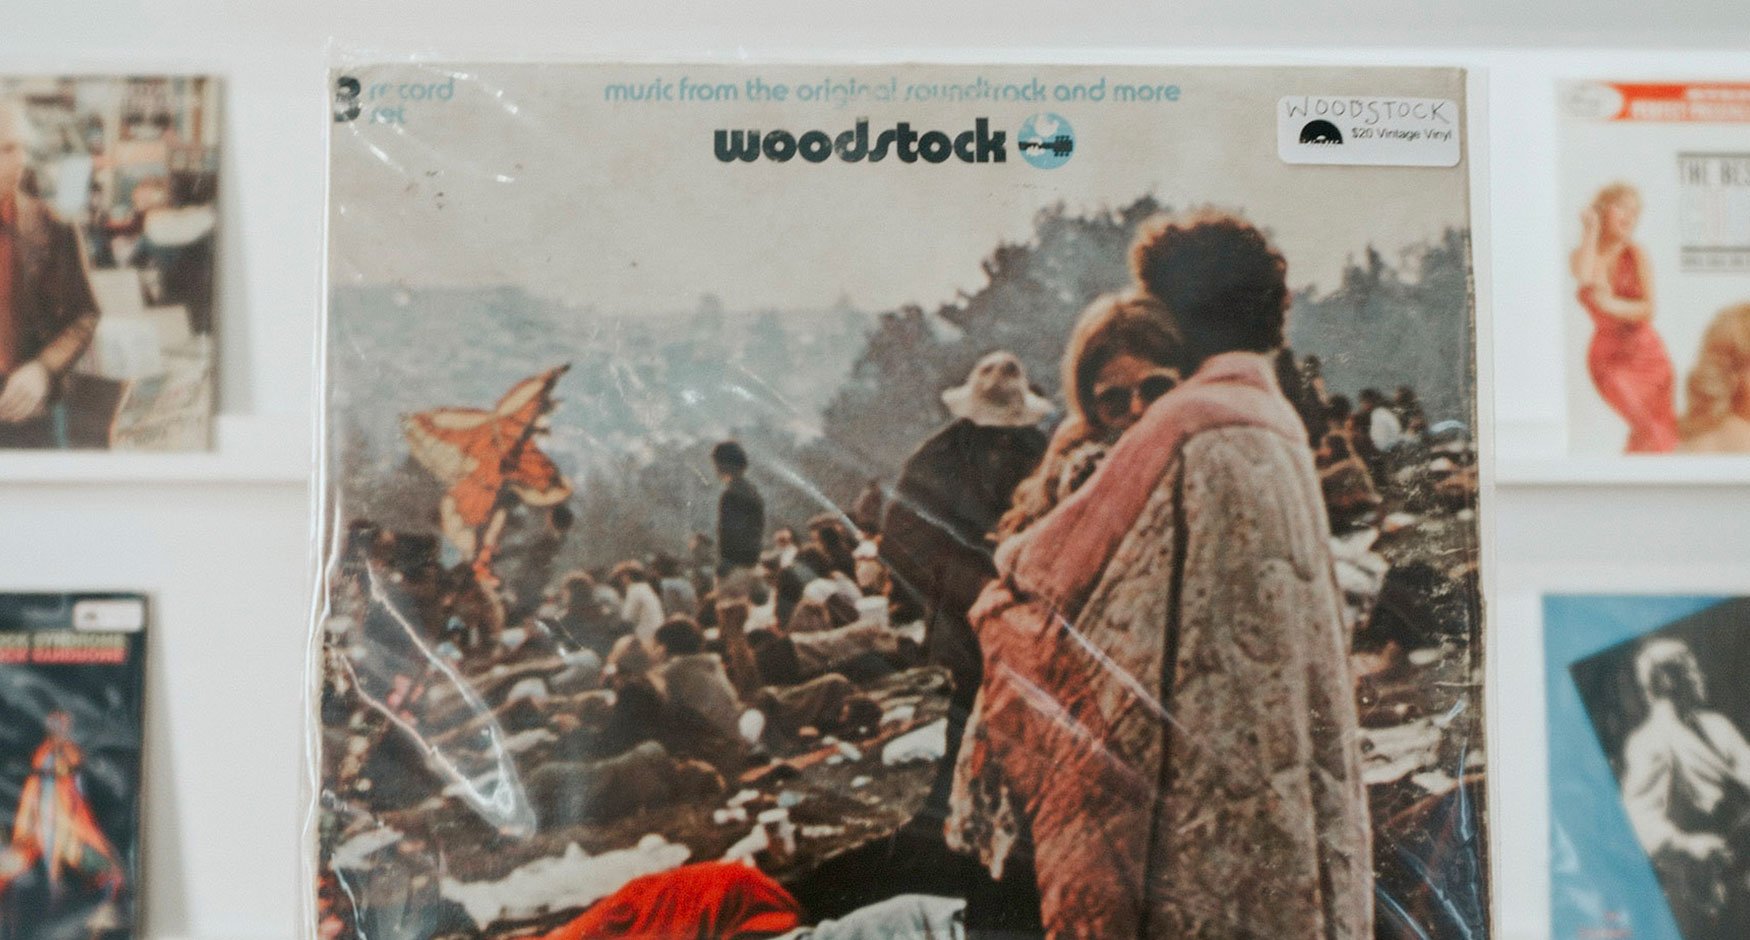 August 15-18, 1969: Woodstock